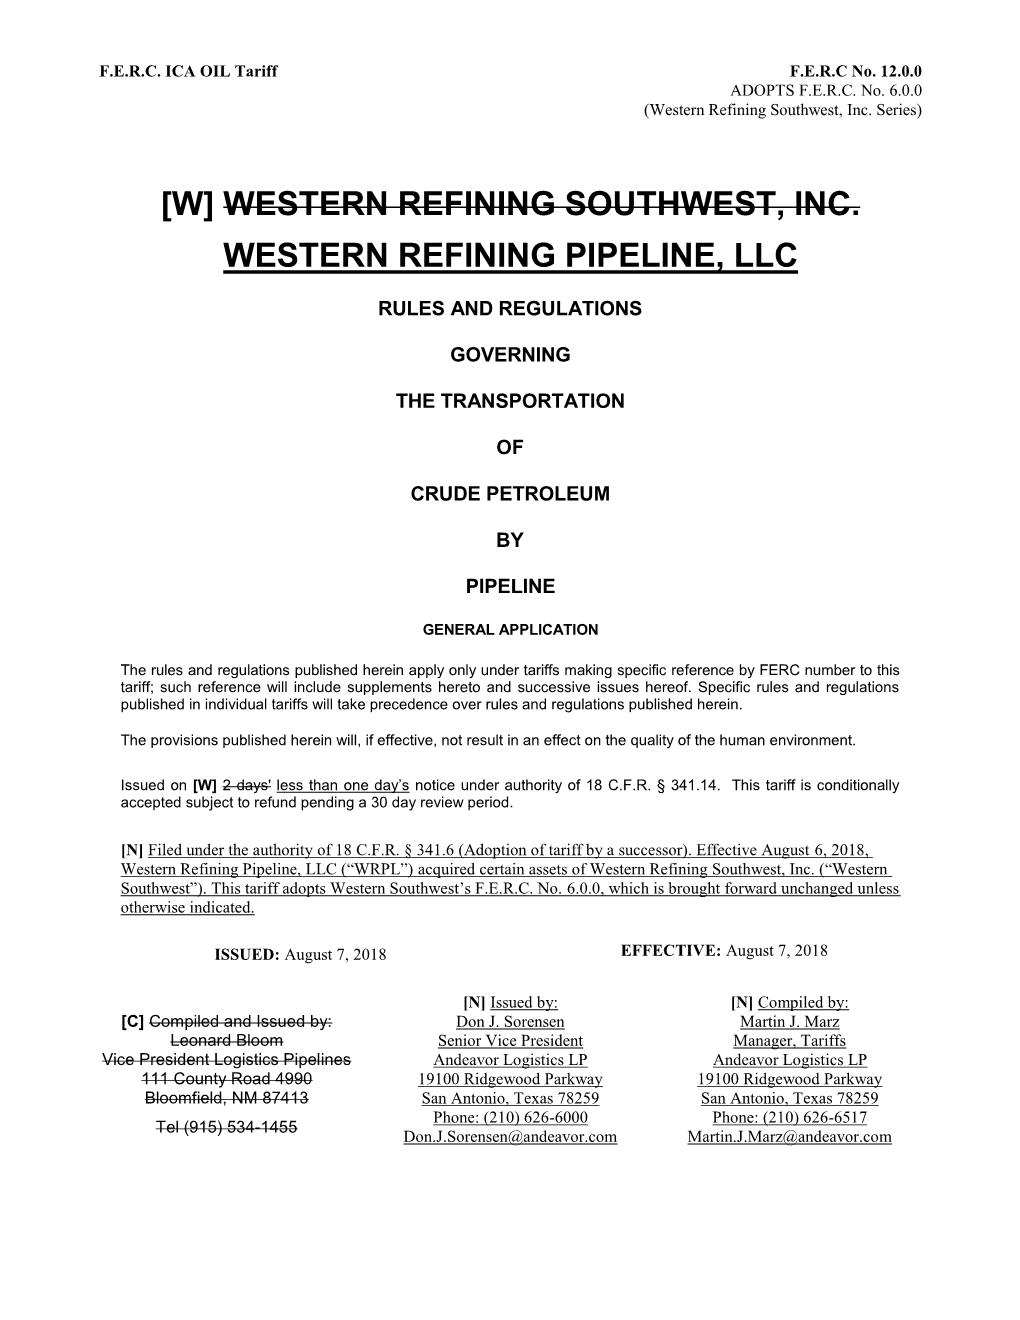 Western Refining Southwest, Inc. Western Refining Pipeline, Llc